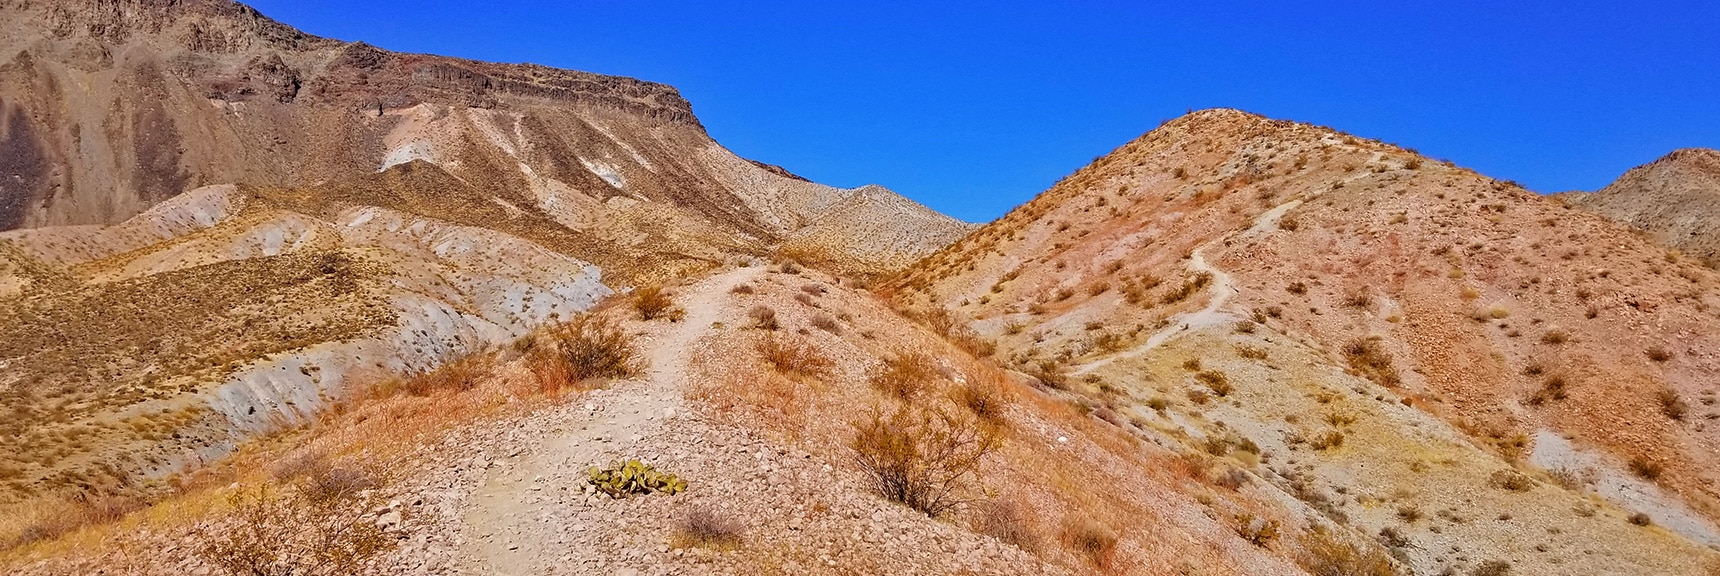 Ascending the High Ridge Trail Toward Fortification Hill | Fortification Hill | Lake Mead National Recreation Area, Arizona